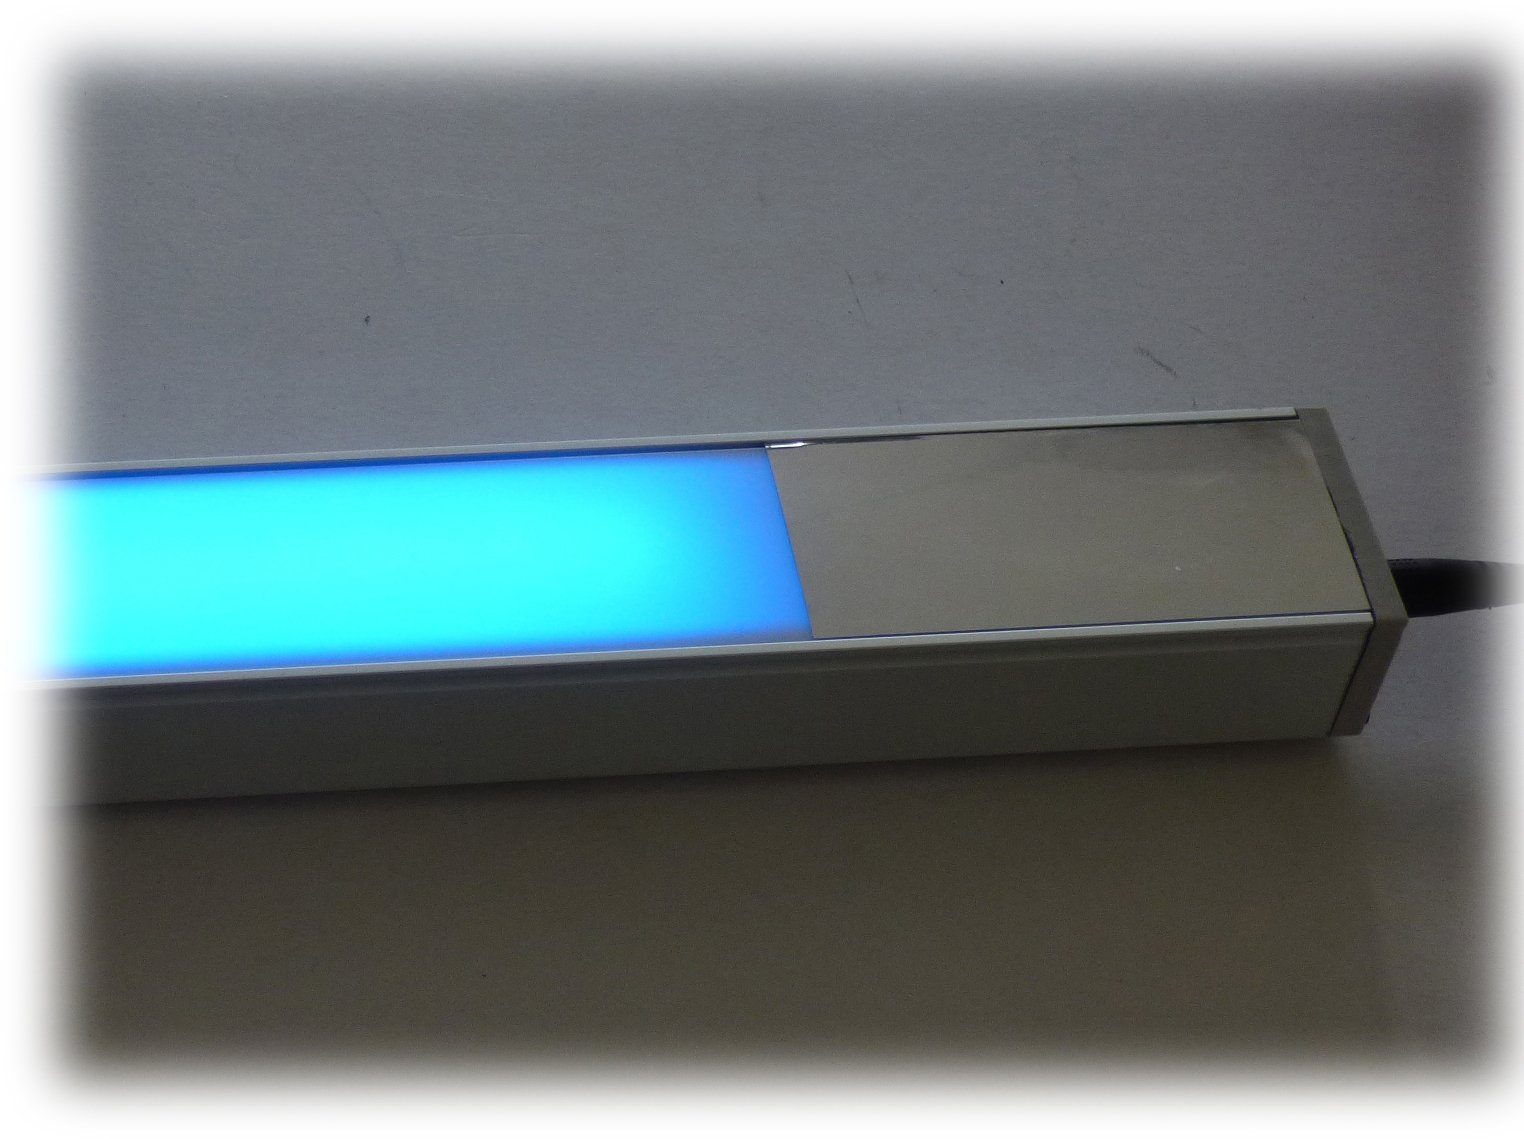 XENON LED Wandleuchte 5891 SMART +4Zonen LED ALU 1,5m Leuchte 43x30mm RGB inkl. Netzteil, LED, Xenon